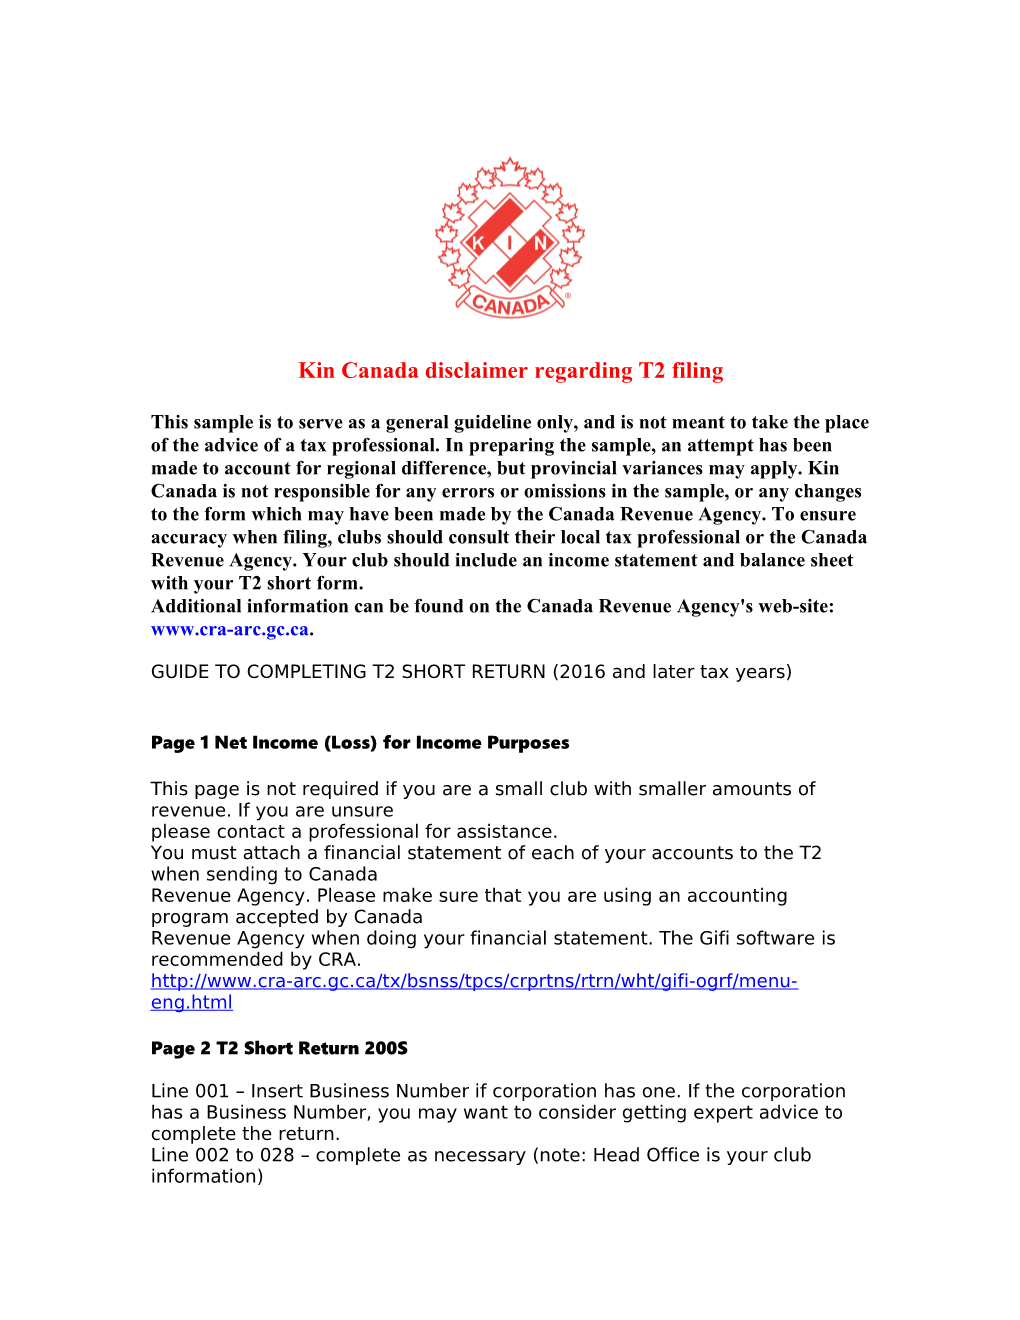 Kin Canada Disclaimer Regarding T2 Filing